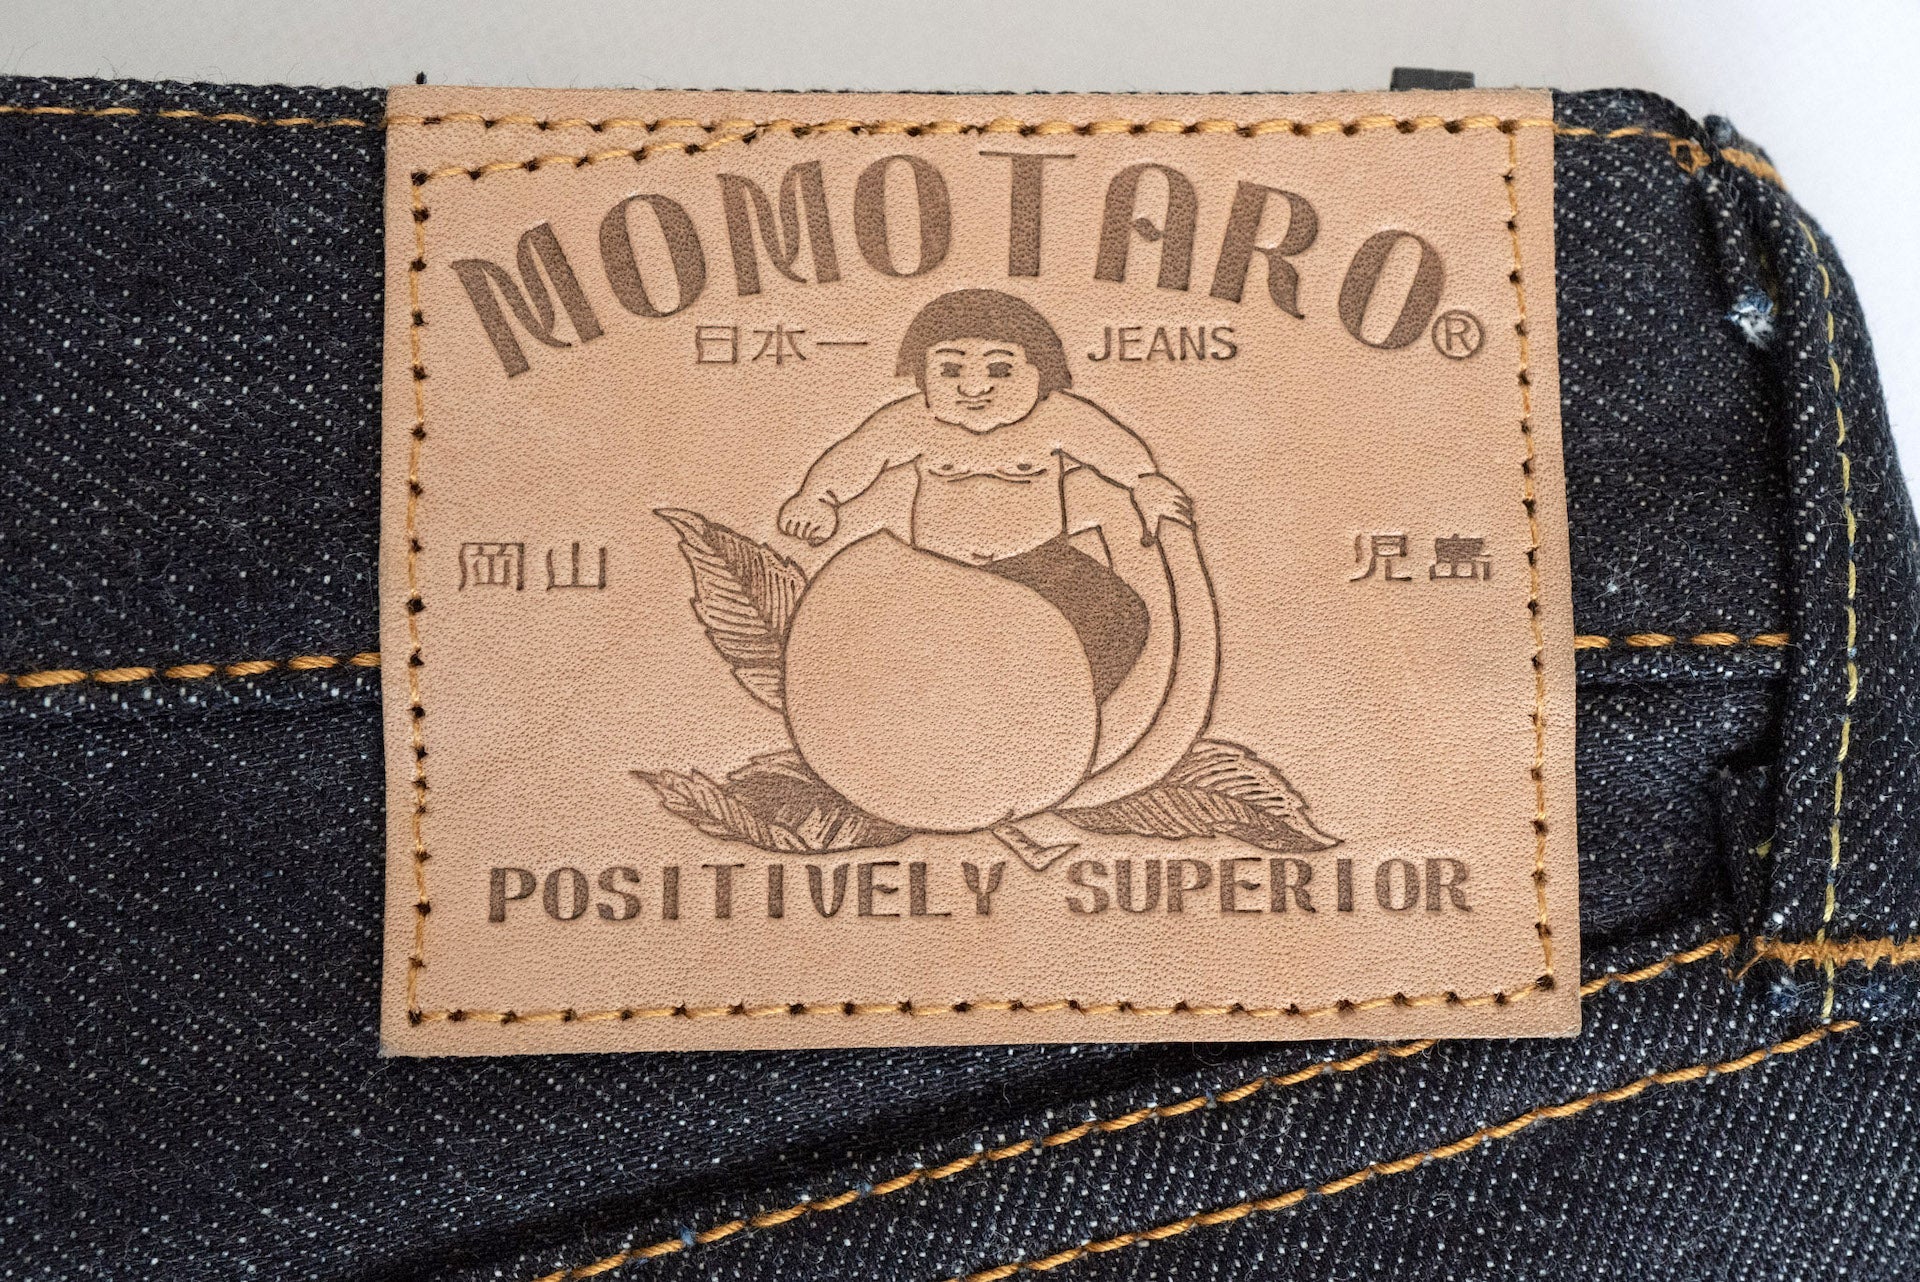 Momotaro 15.7oz 0306-SP Denim (Slim Tapered Fit)